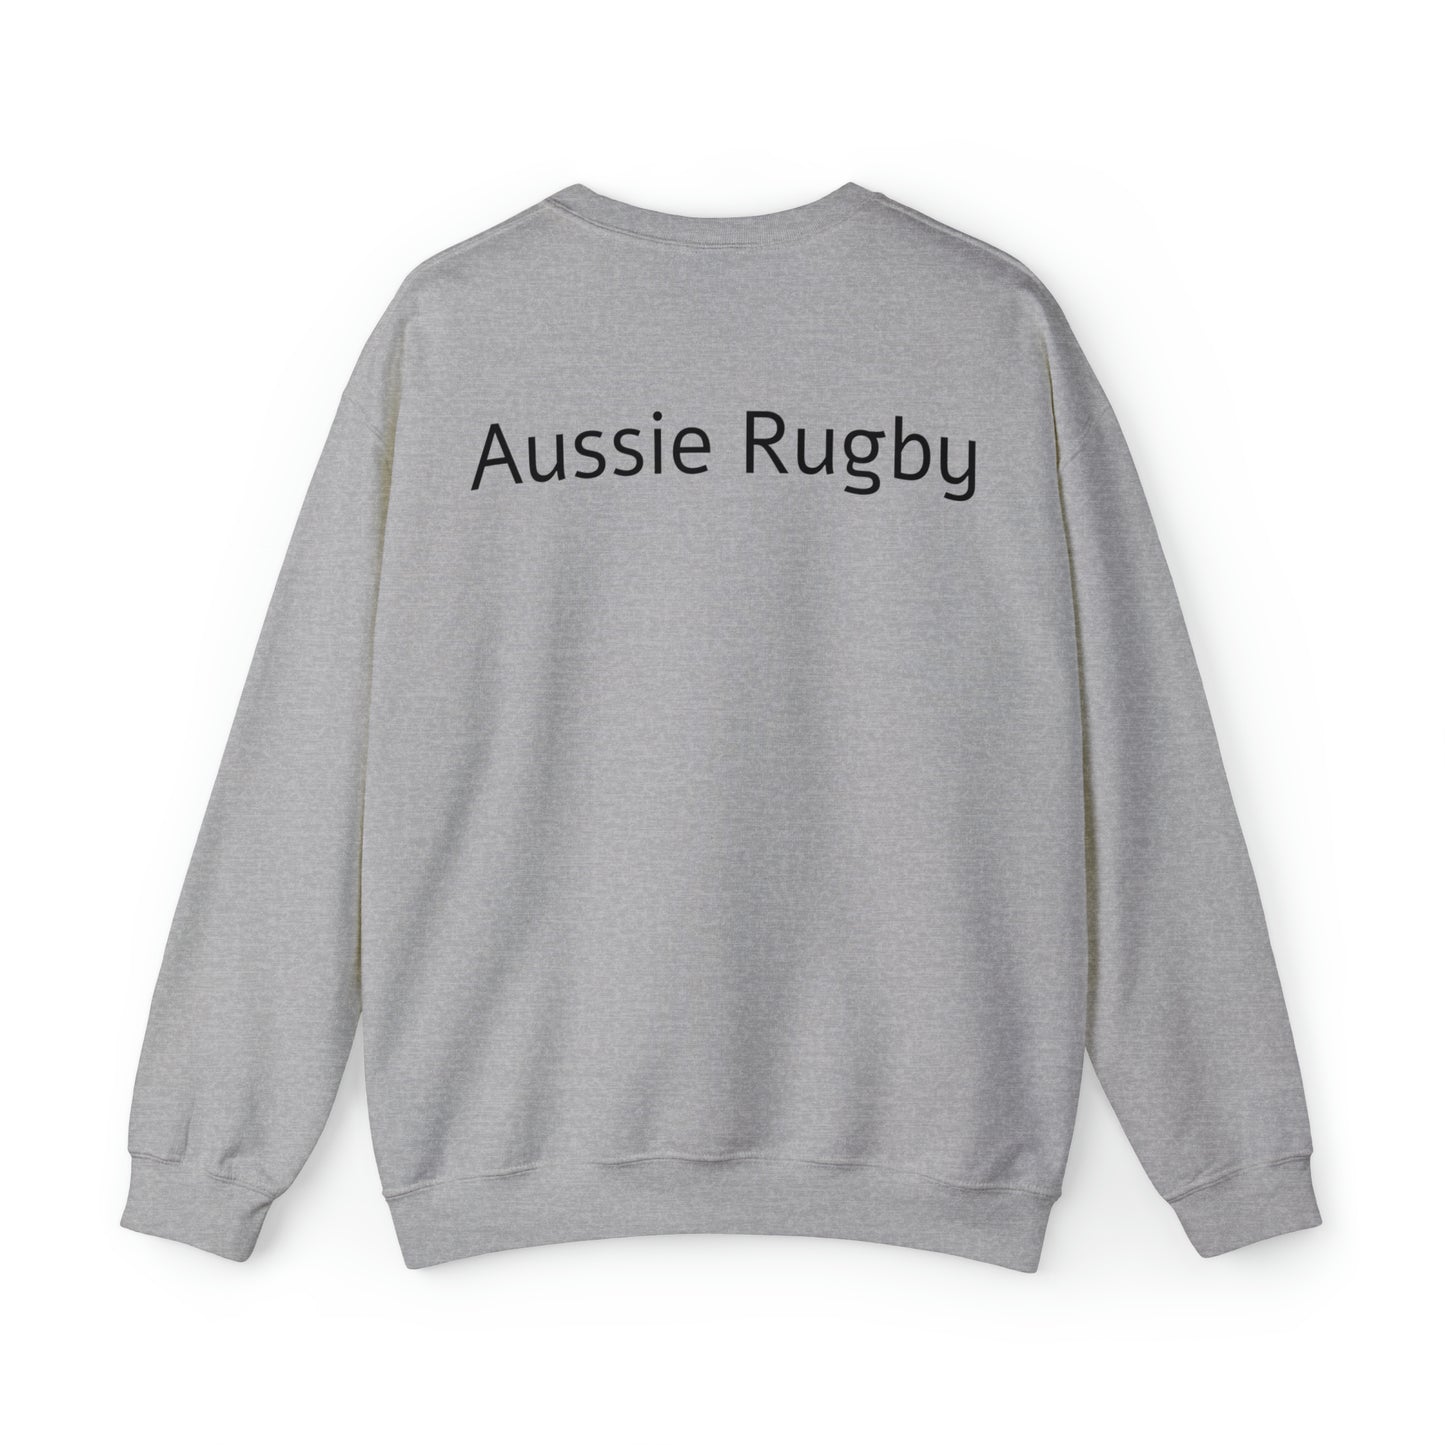 Ready Aussies - light sweatshirts